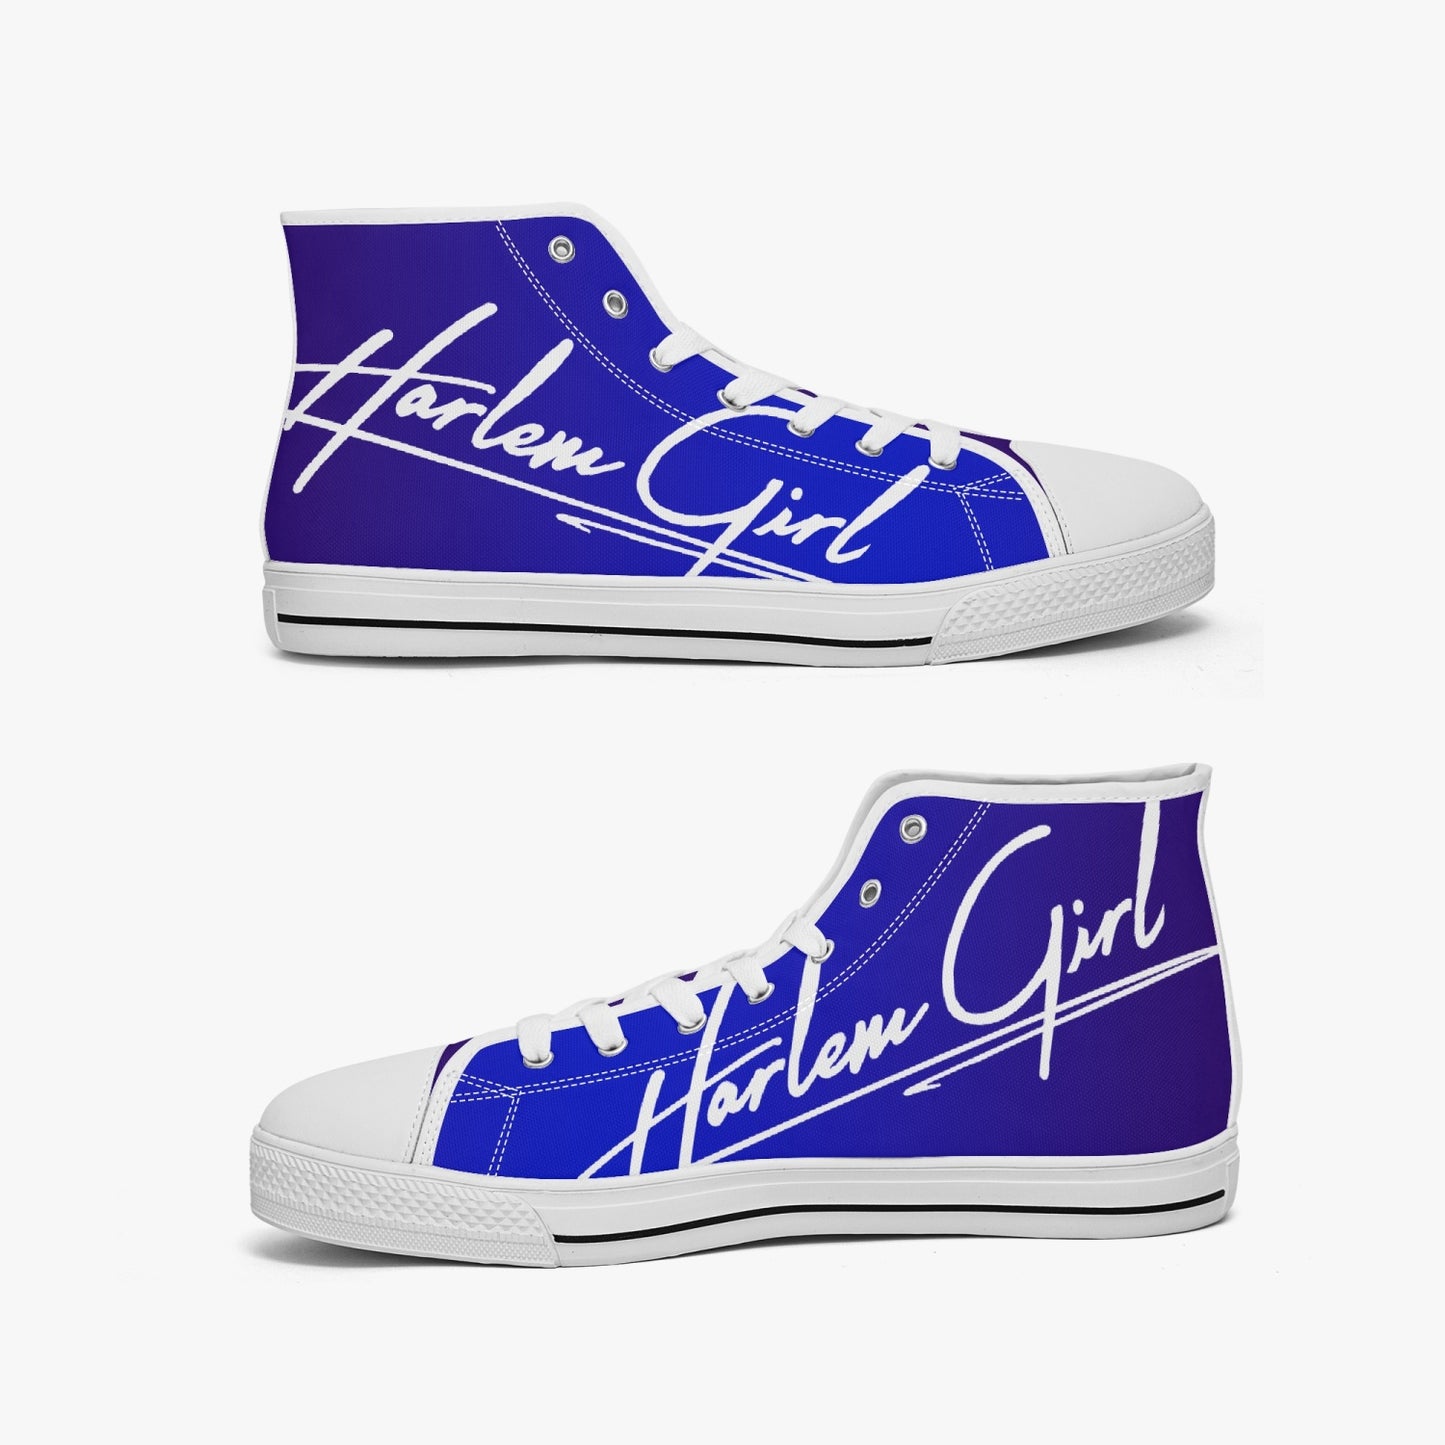 HB Harlem Girl "Lenox Ave" Classic High Top - Sapphire - Women (Black or White Soles)